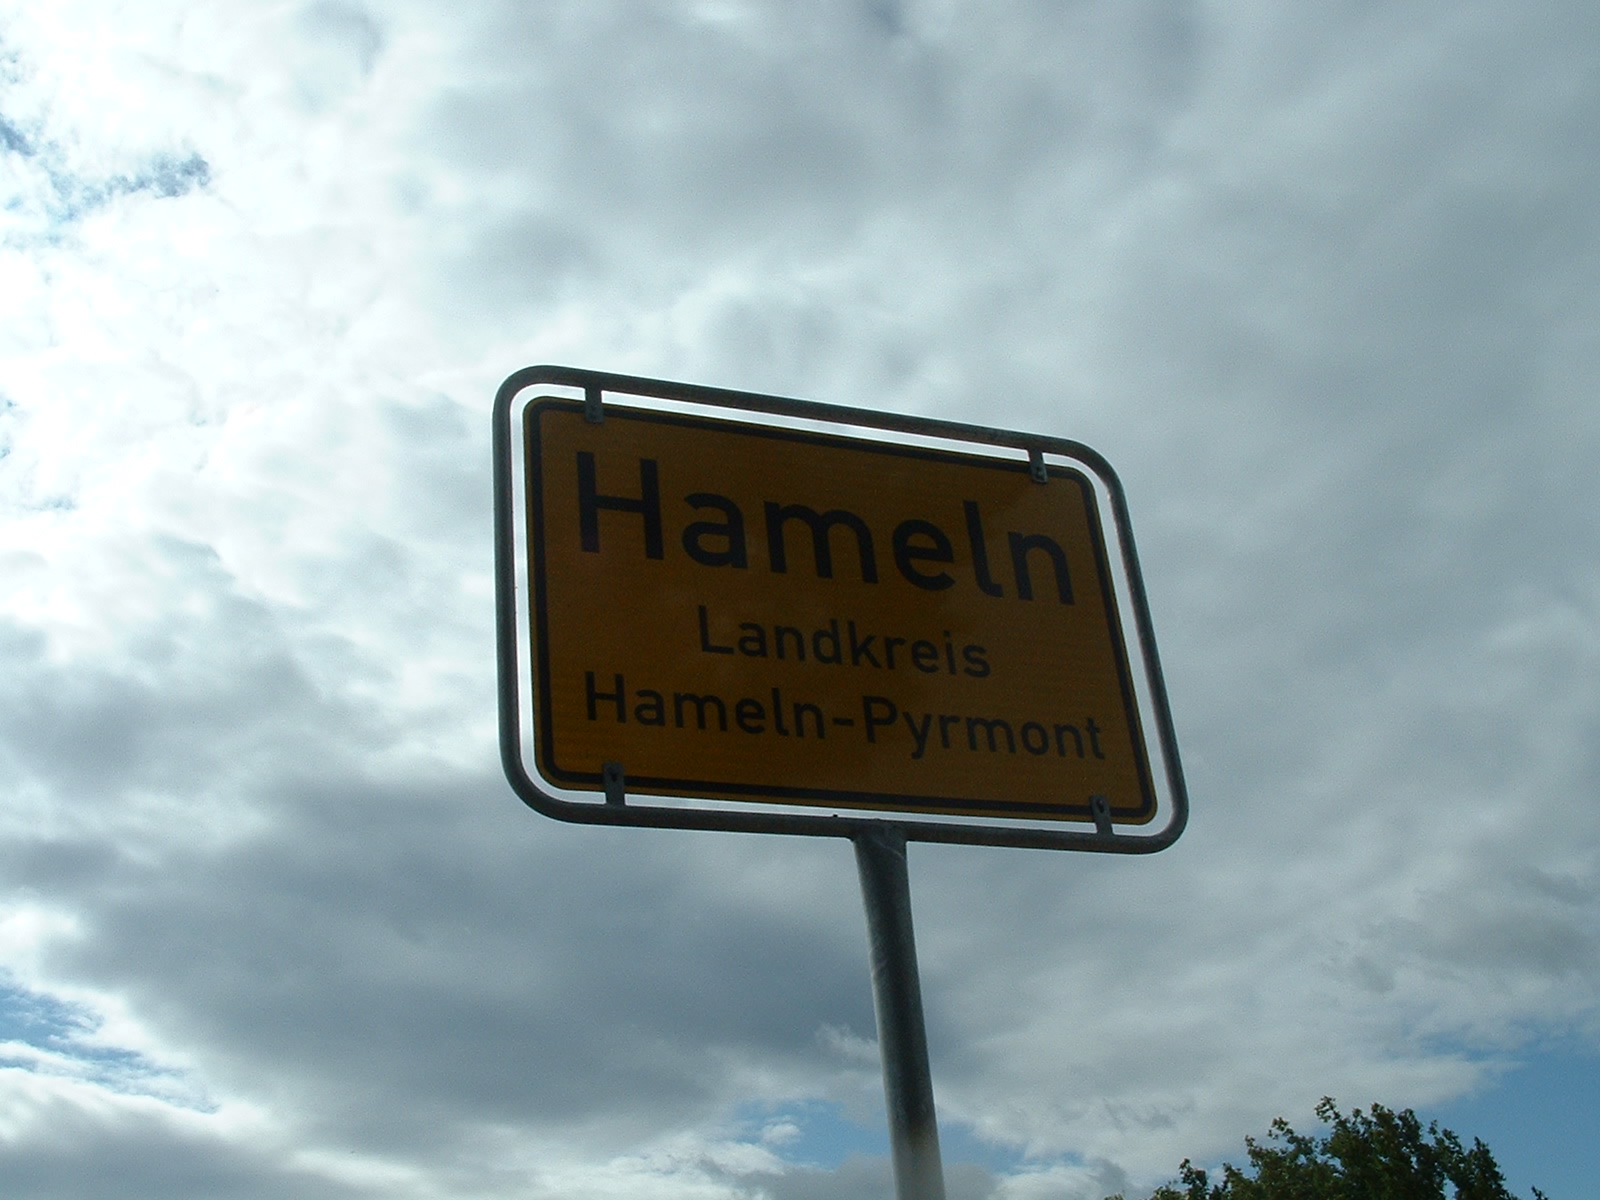 Stadtmarketing Hameln